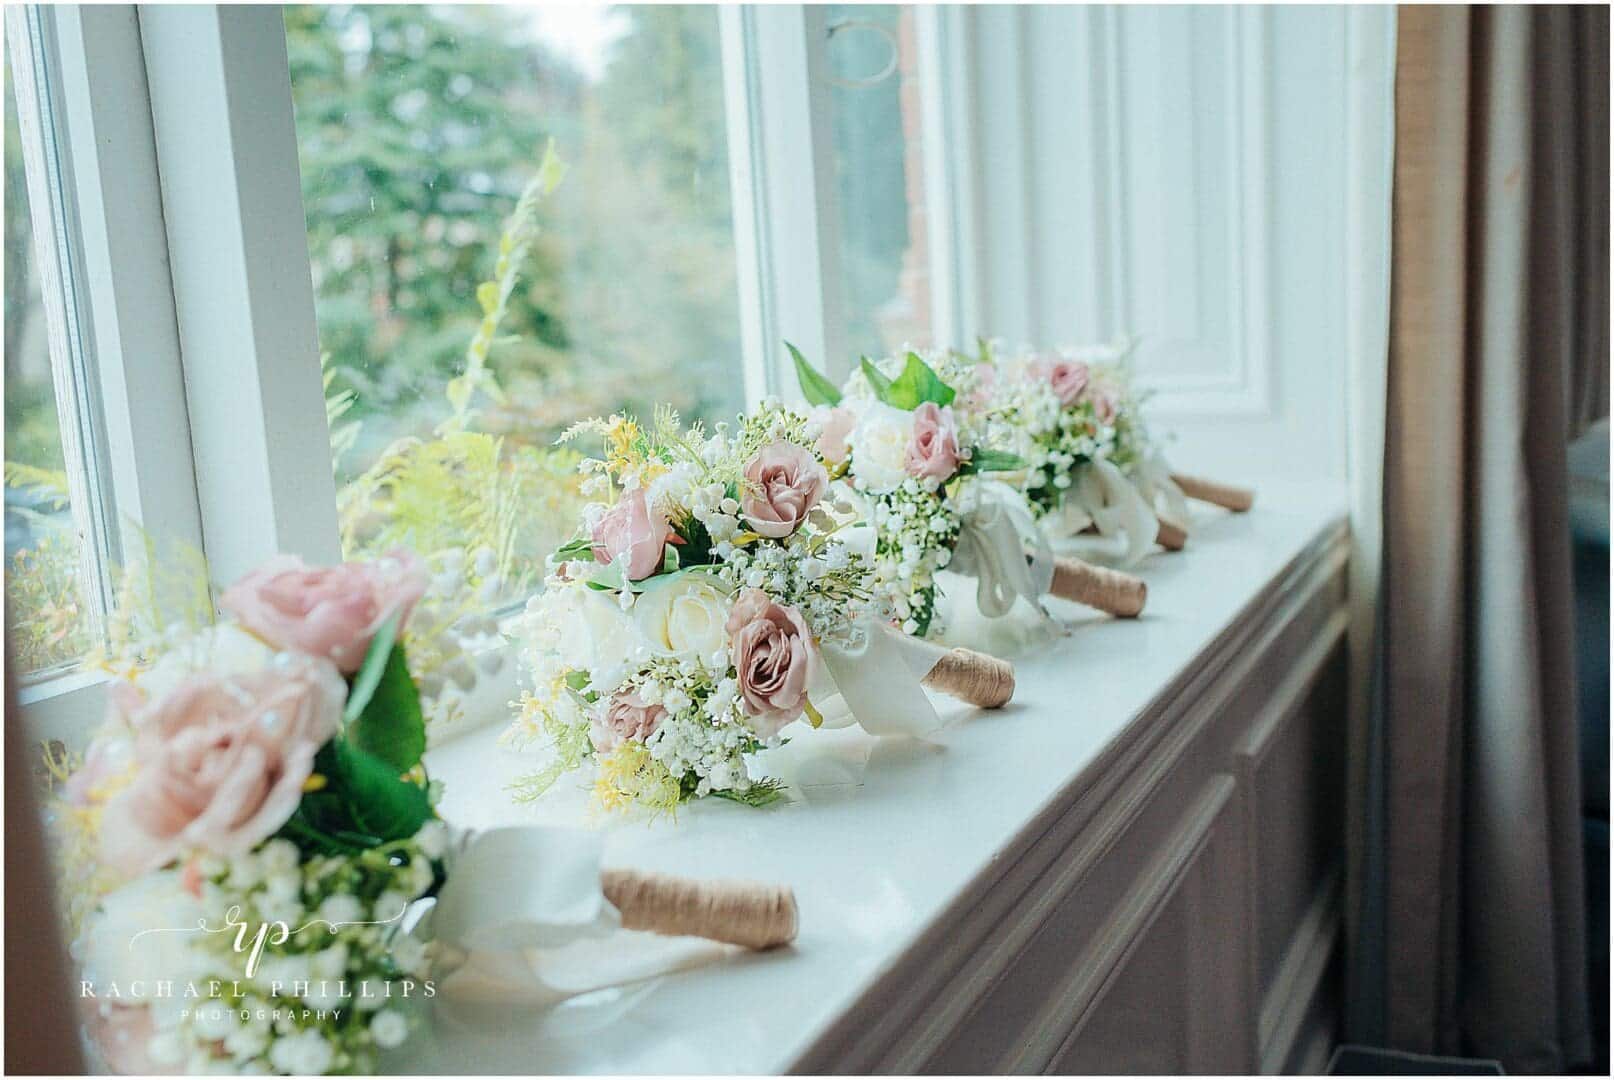 Beautiful wedding flowers on a window ledge